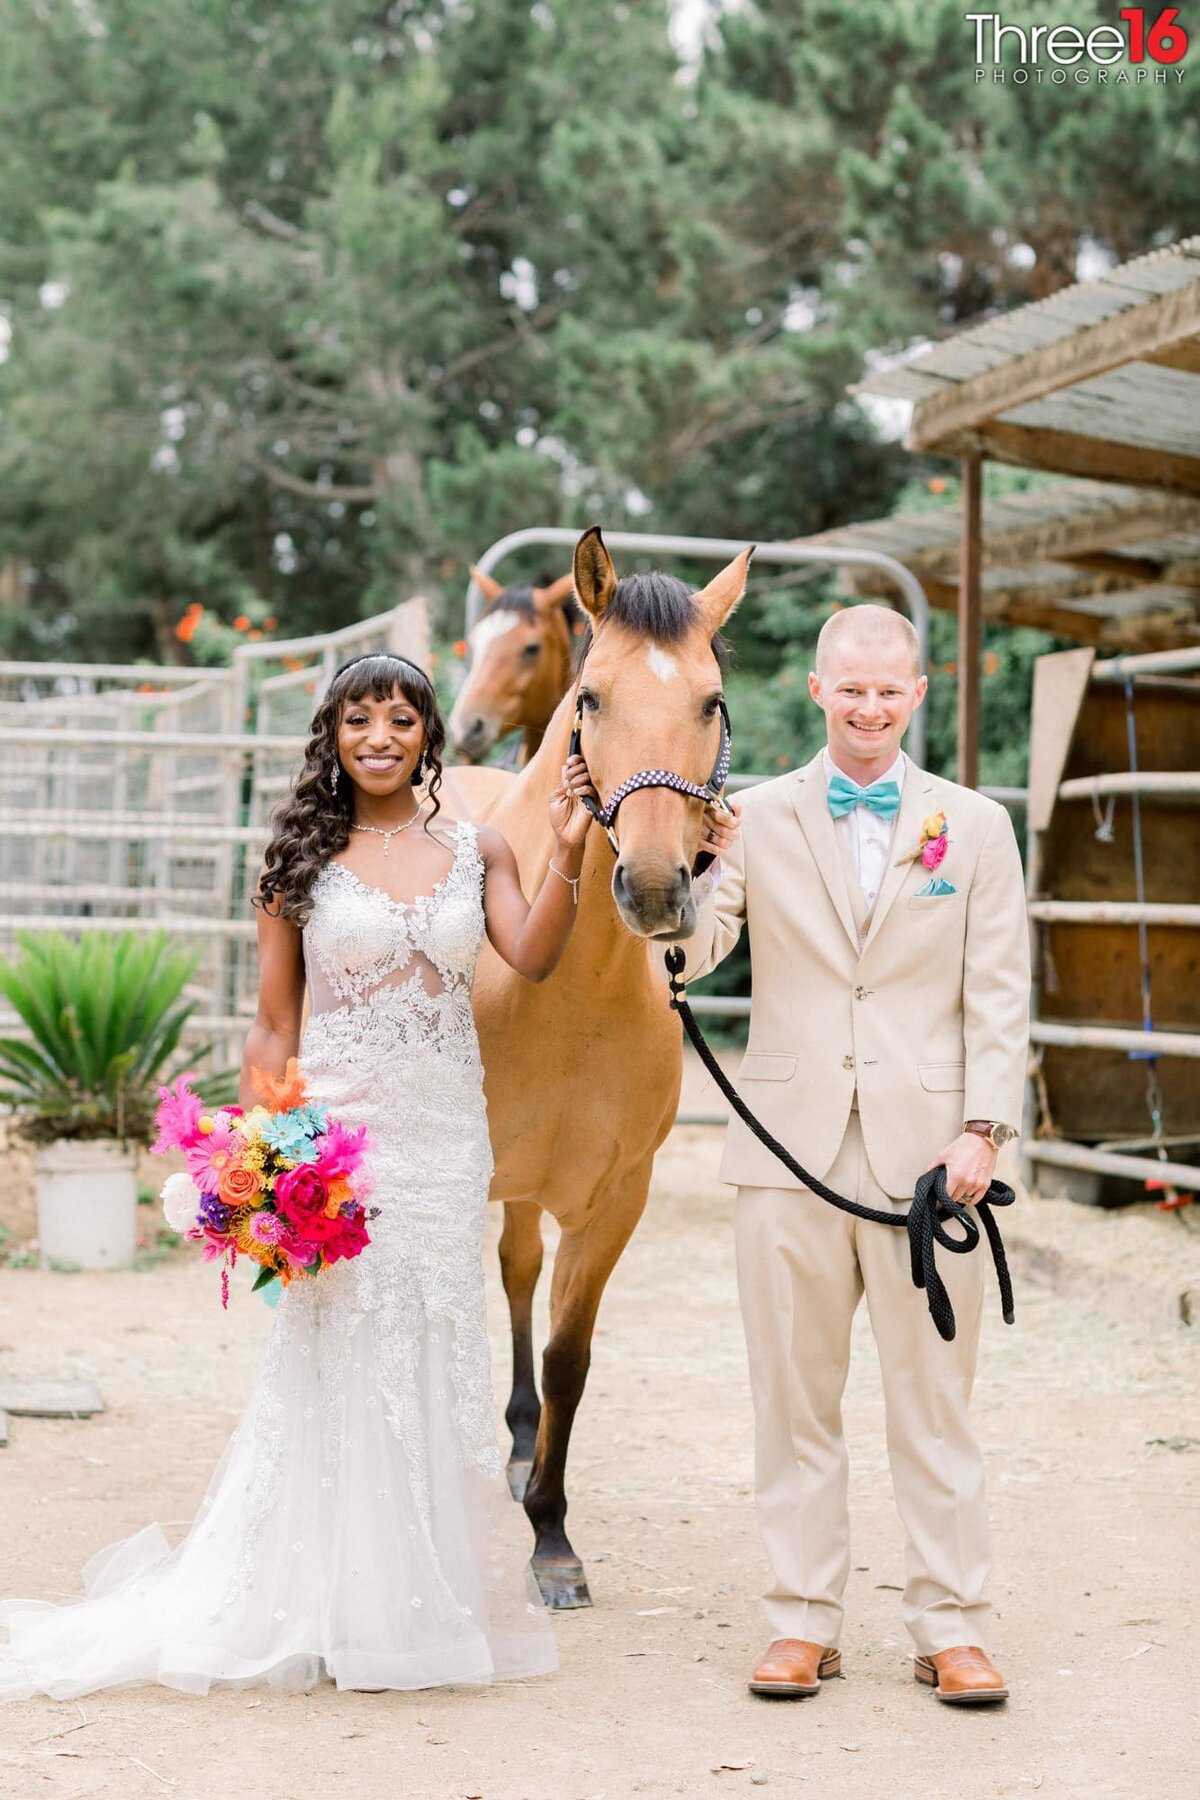 The Red Horse Barn Wedding Venue Photographer